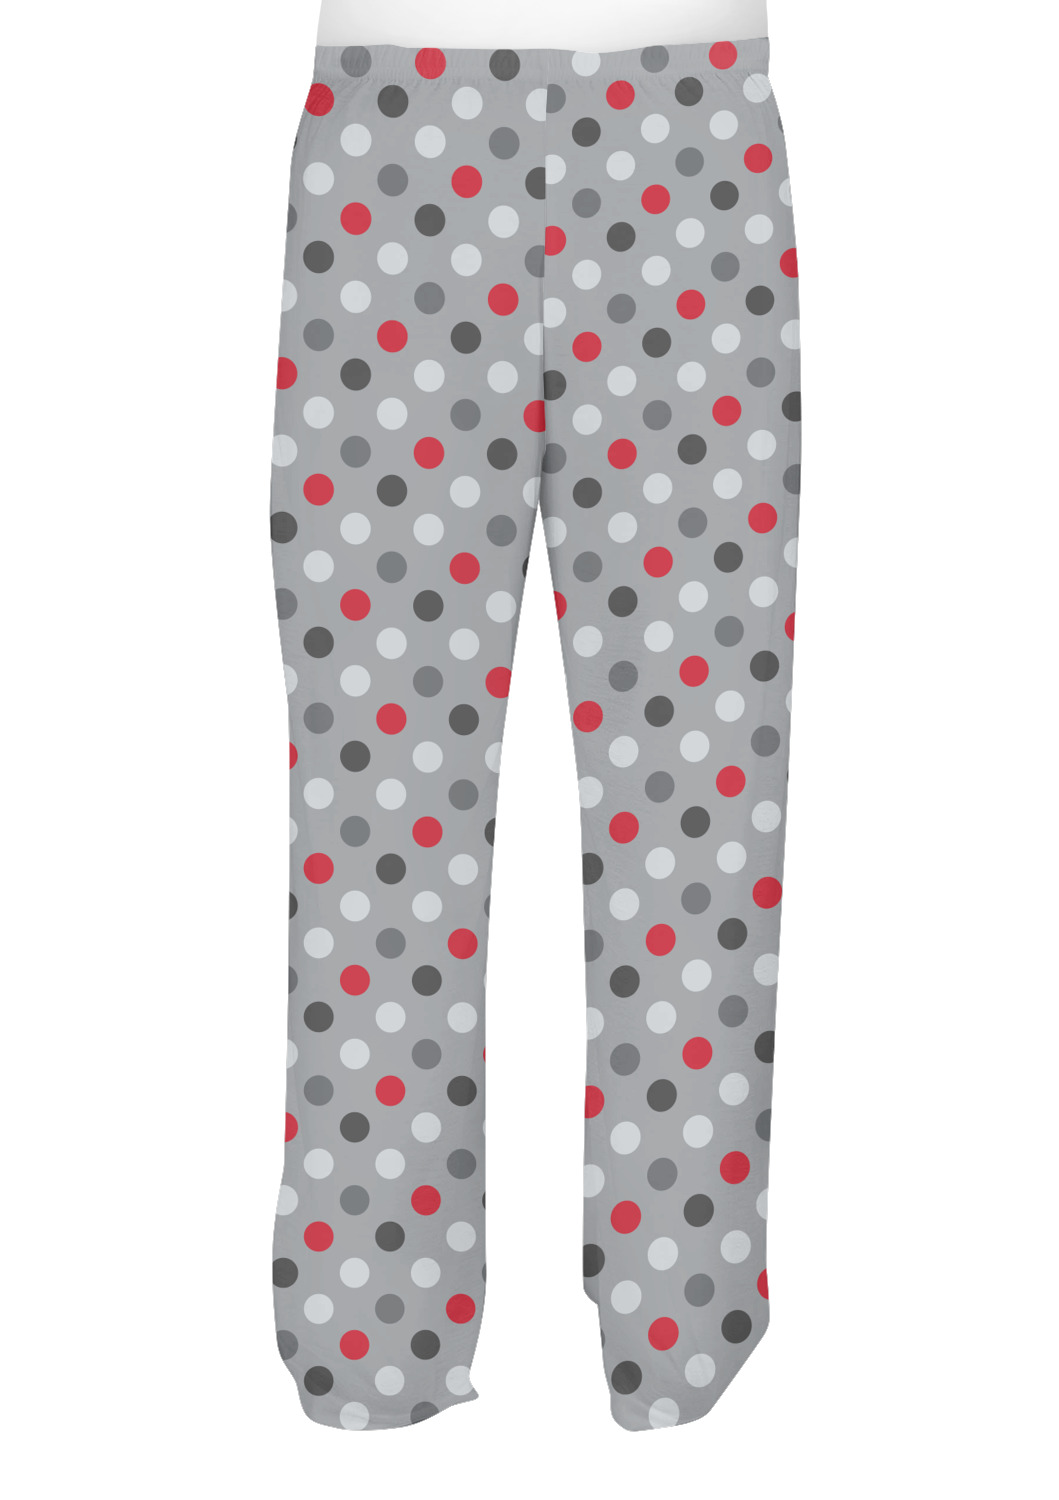 Custom Red & Gray Polka Dots Mens Pajama Pants - S | YouCustomizeIt